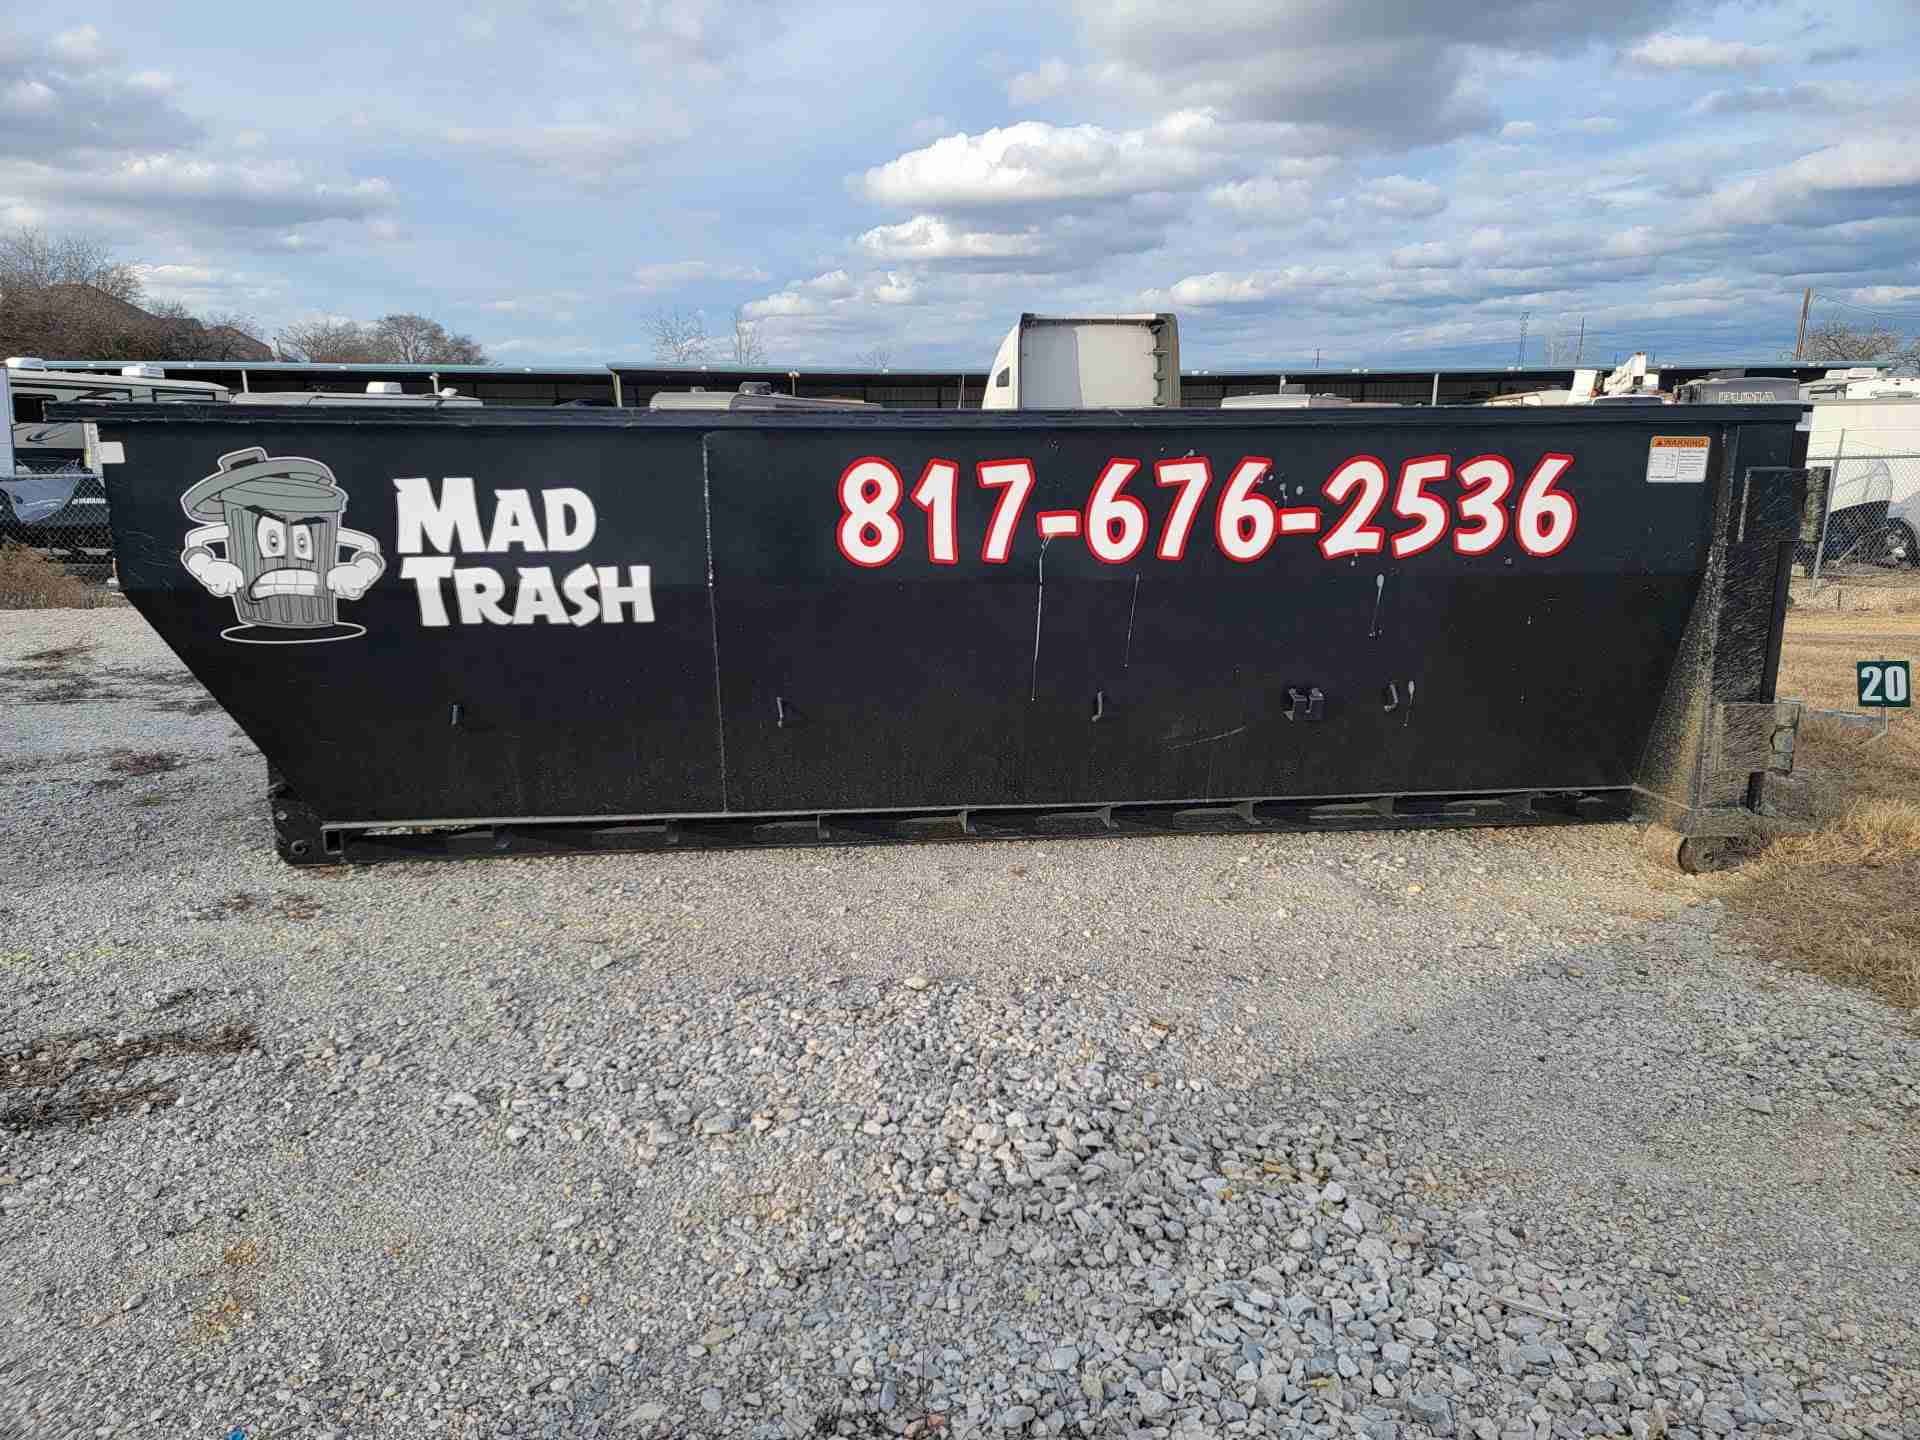 Mad Trash - Construction Dumpster Rentals